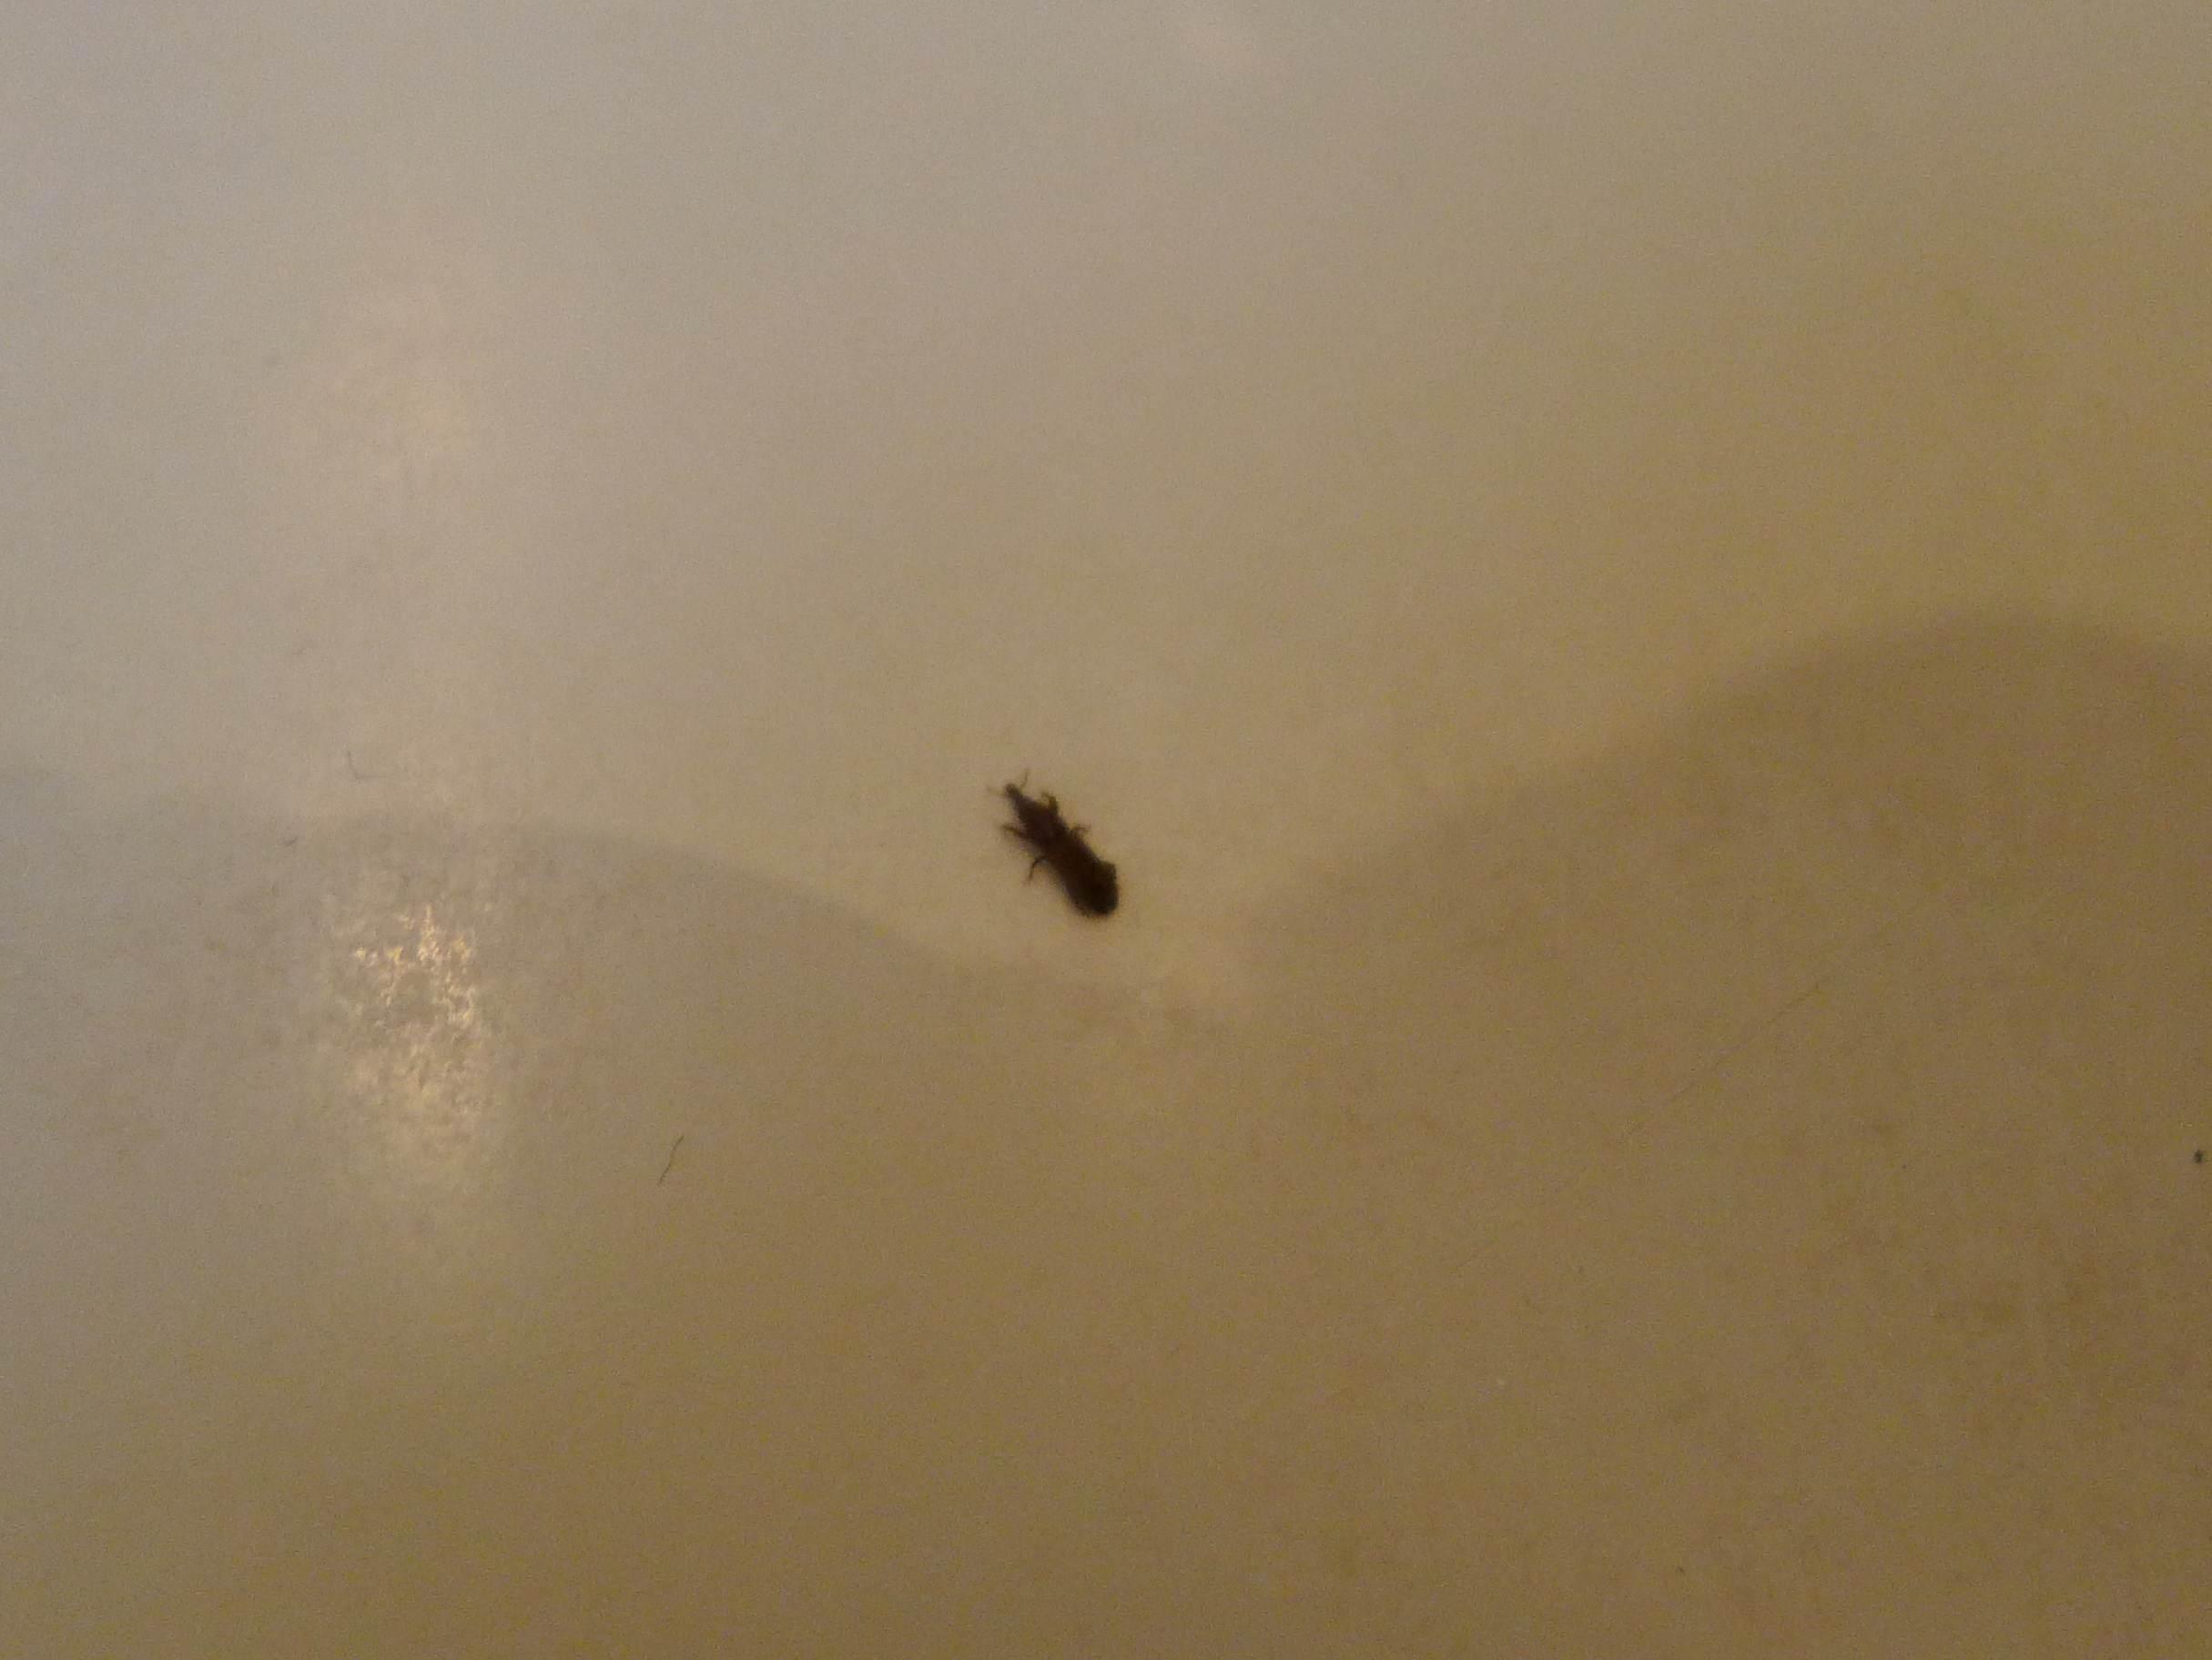 tiny spider like black bugs in bathroom sink